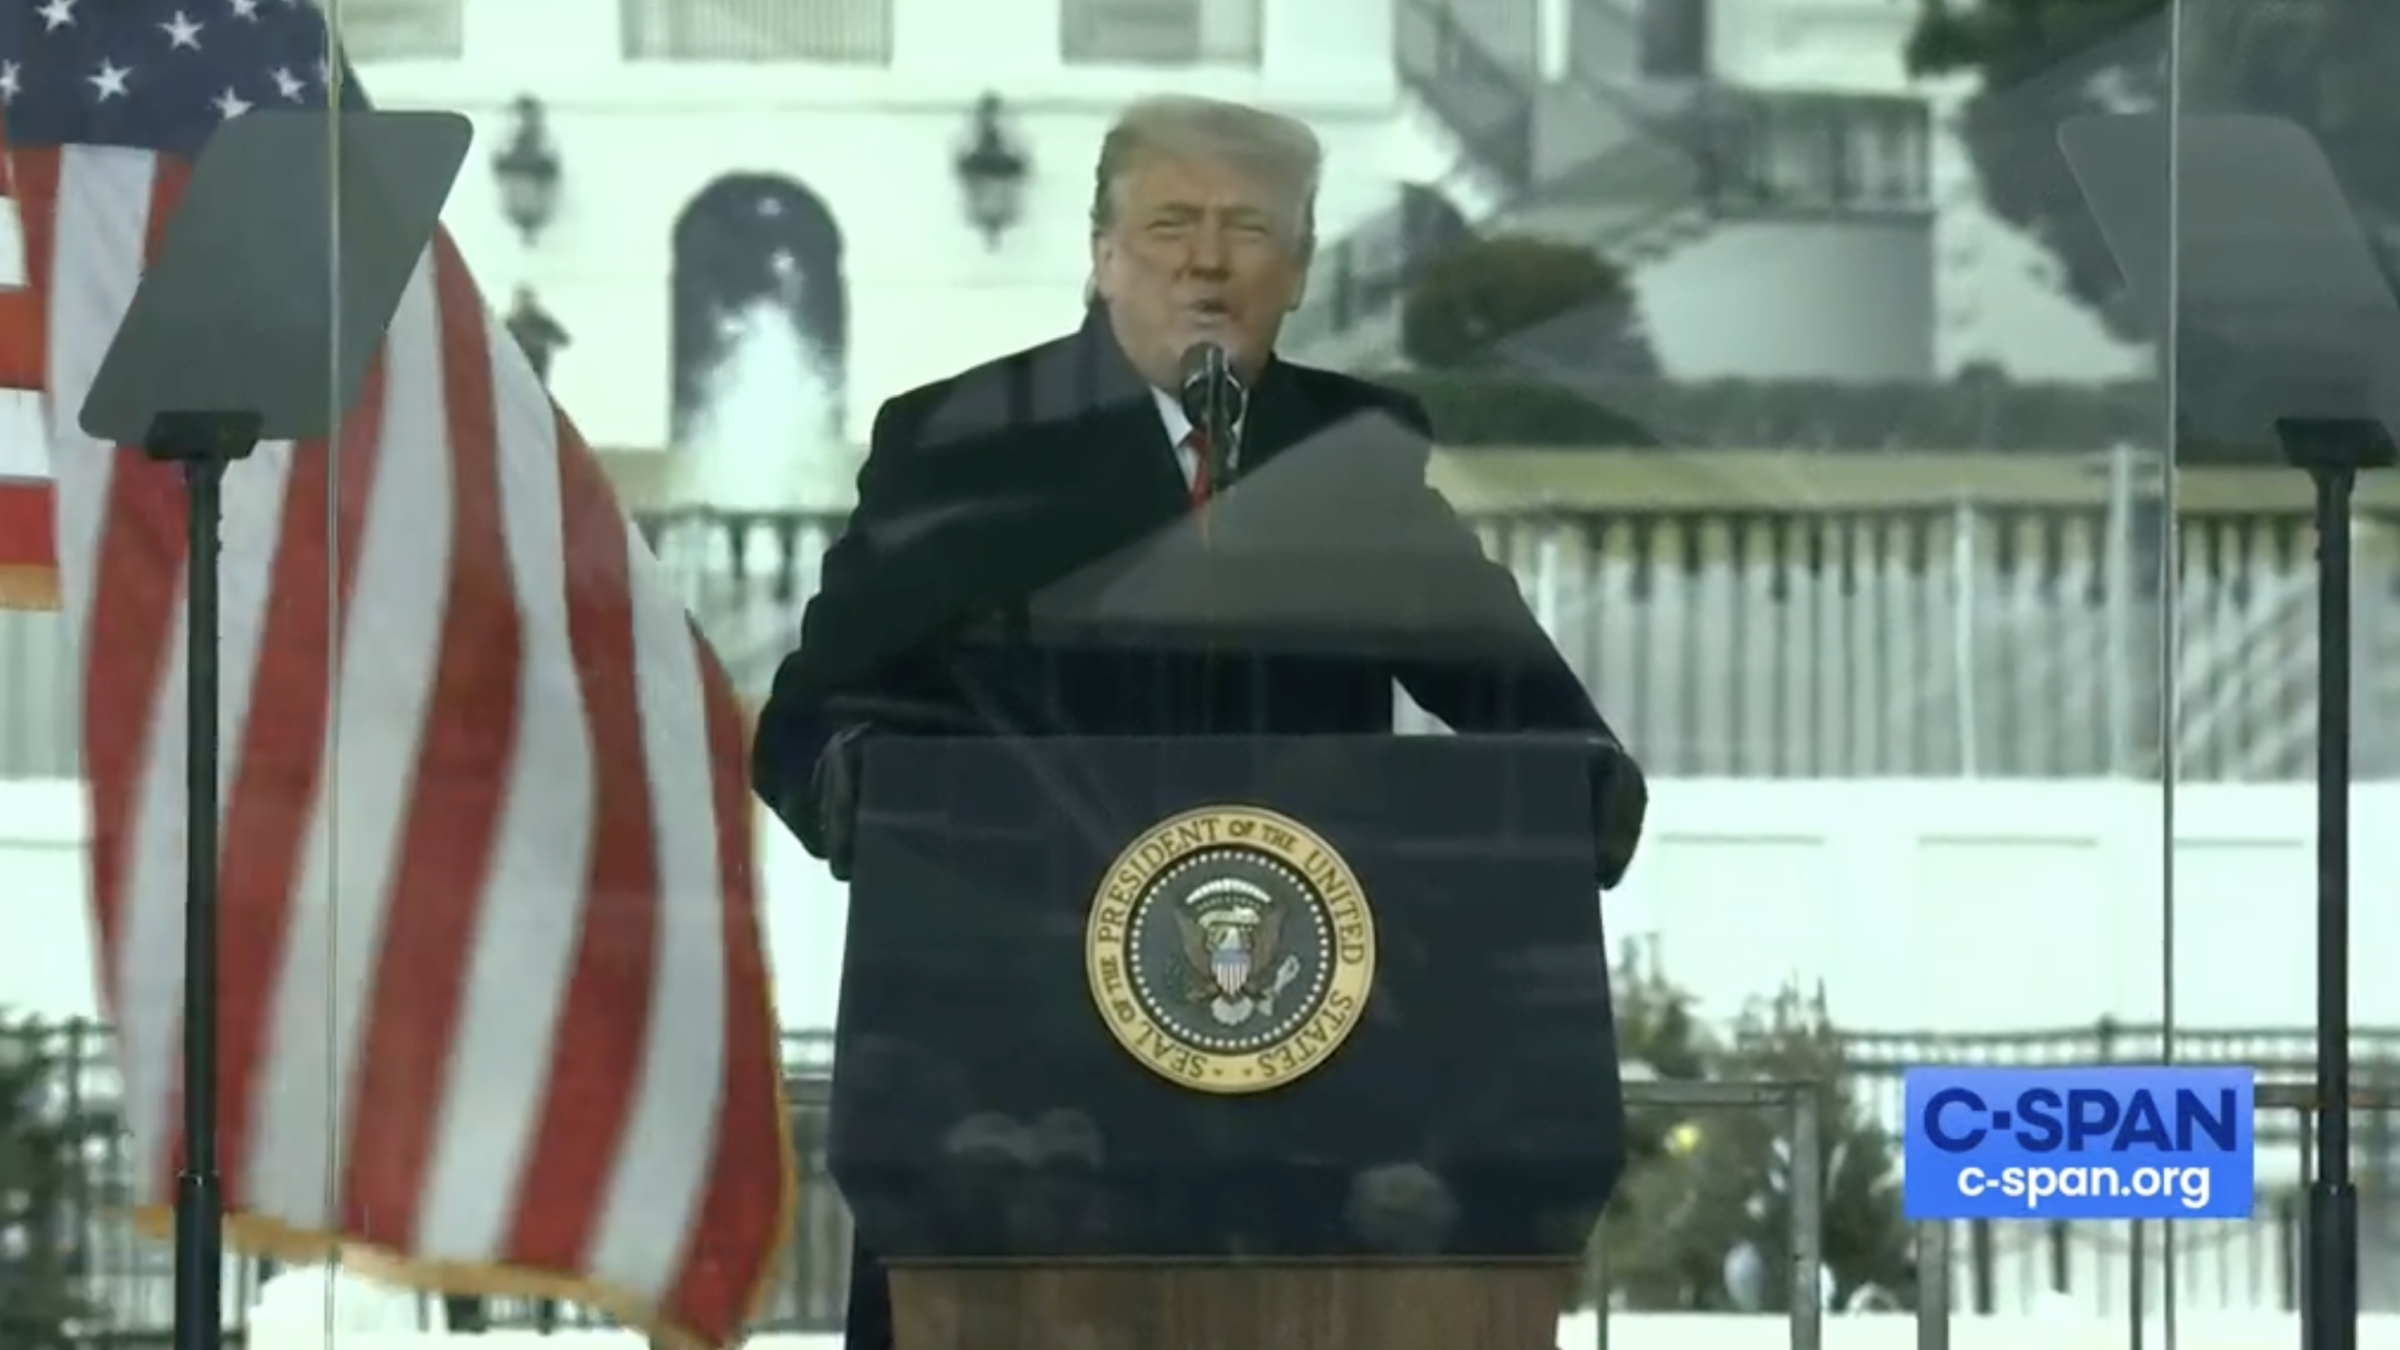 Trump speaking at rally ellipse on January 6